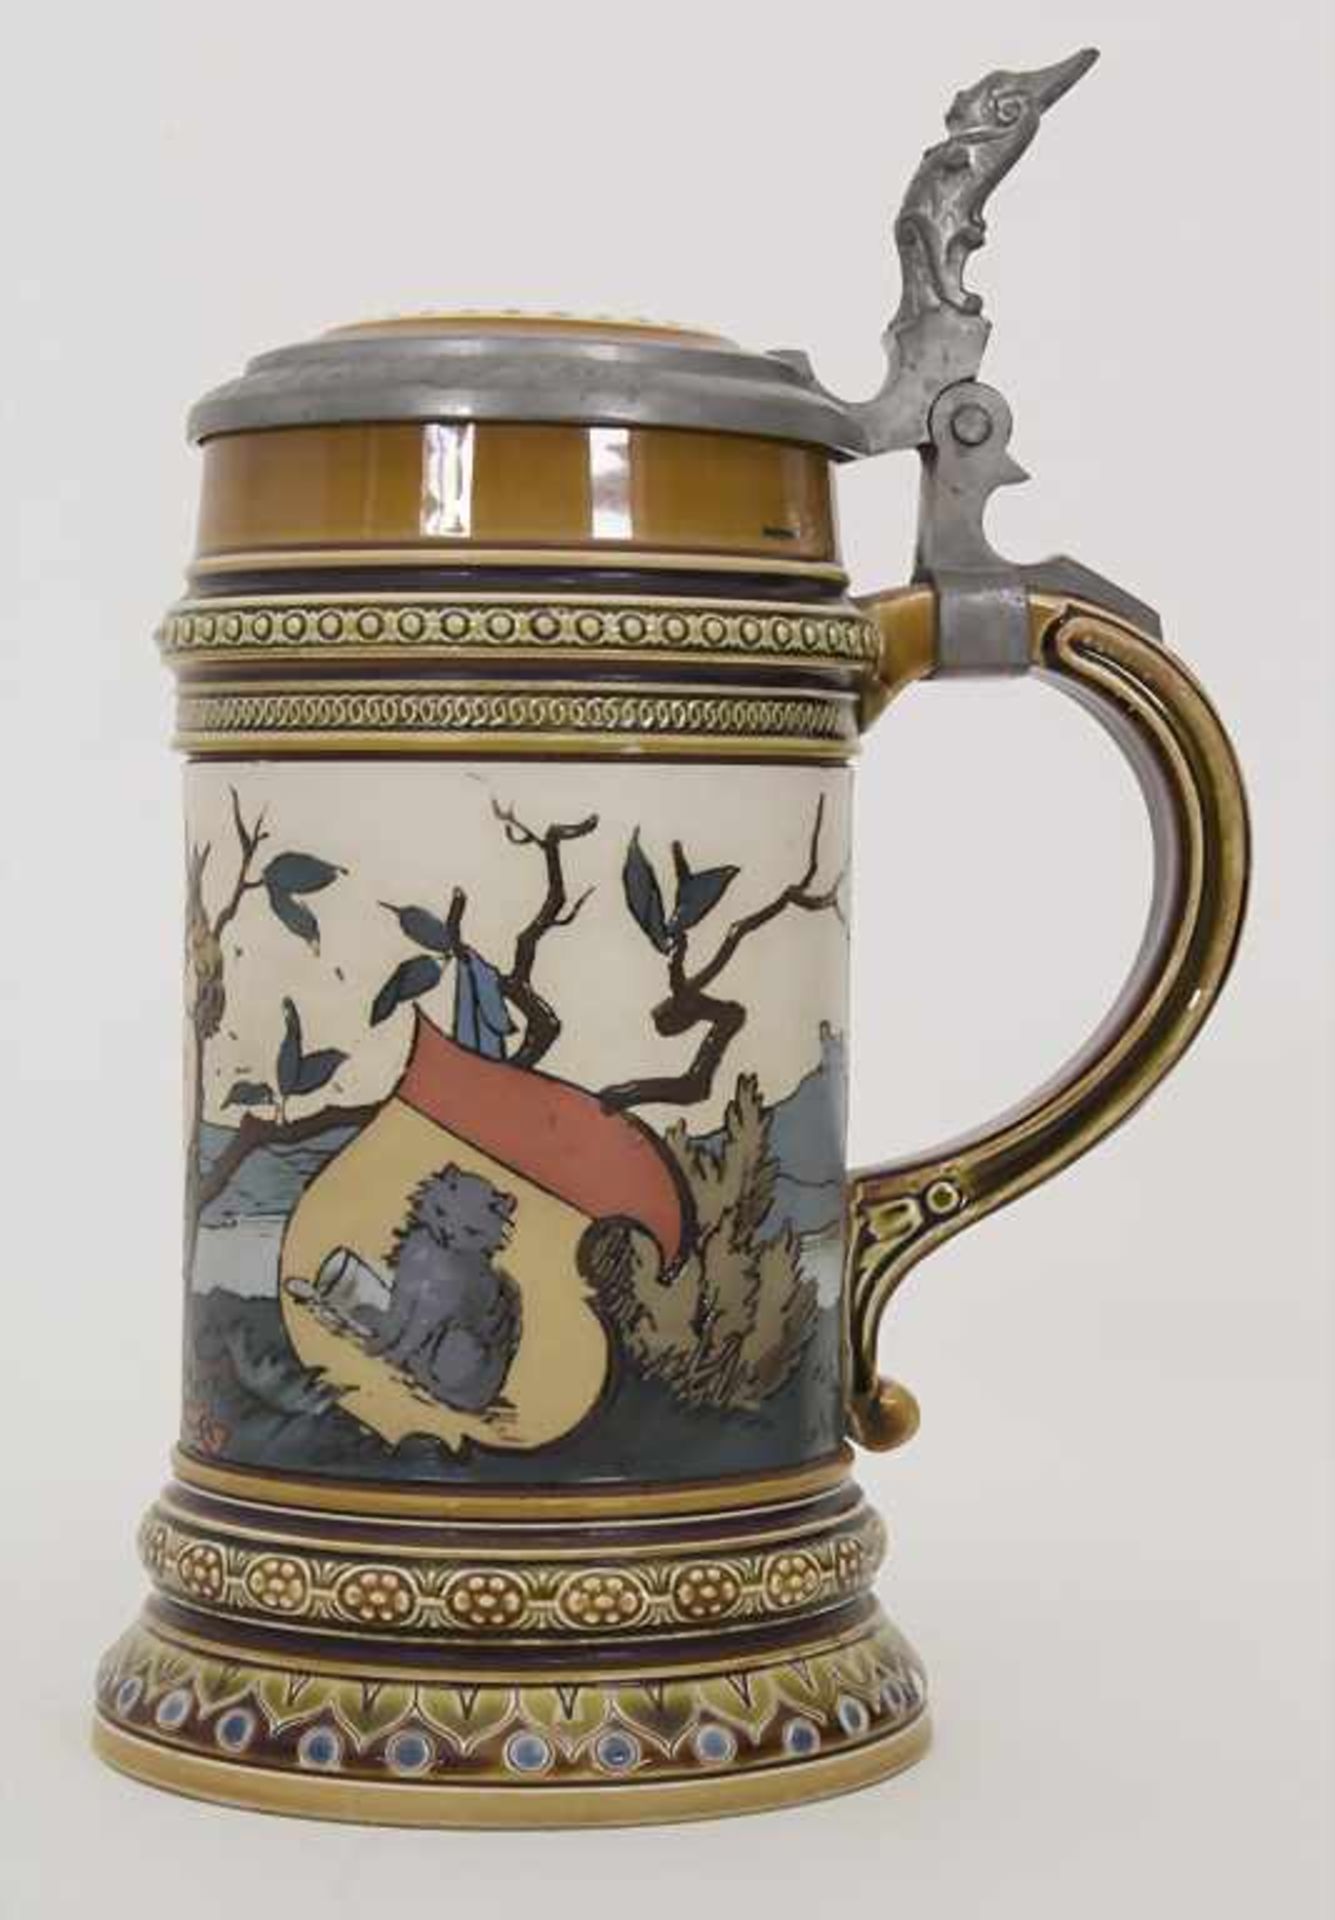 Bierkrug 0,5 L / A stoneware beer mug, Mettlach, Entwurf Christian Warth, um 1894 - Image 2 of 8